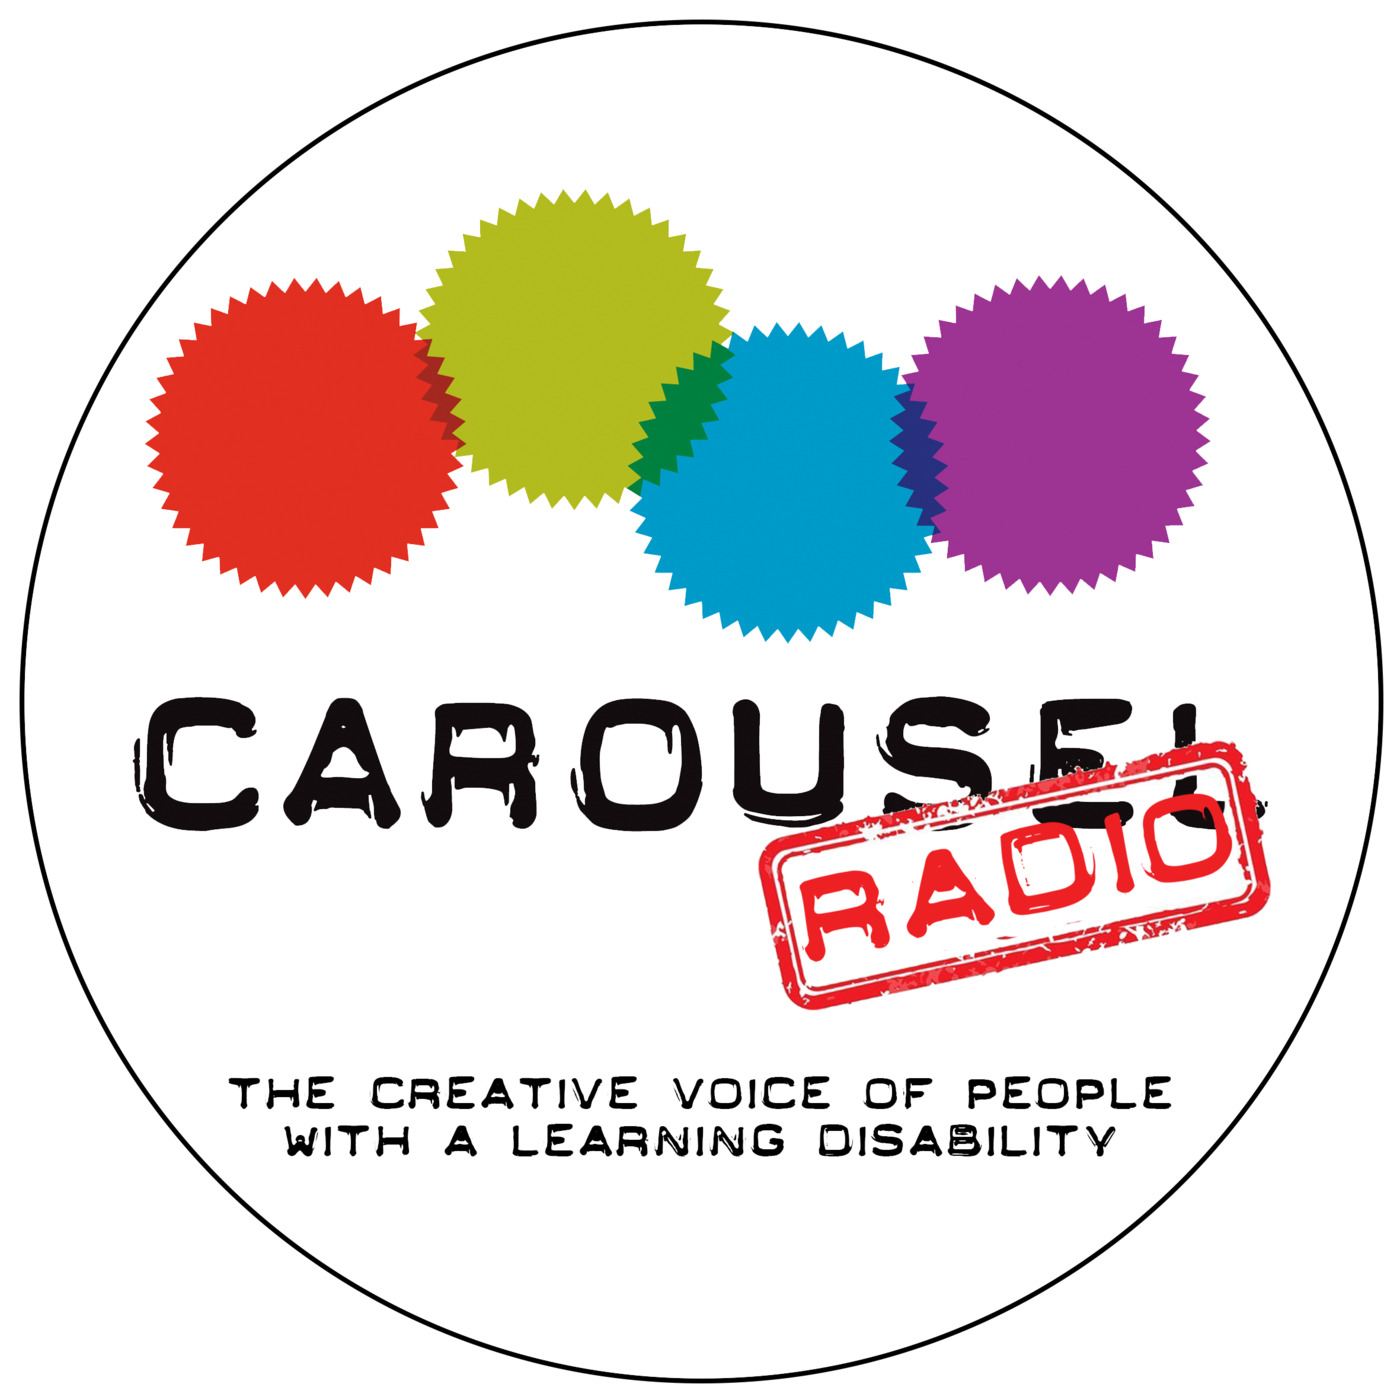 Carousel Radio July 2019